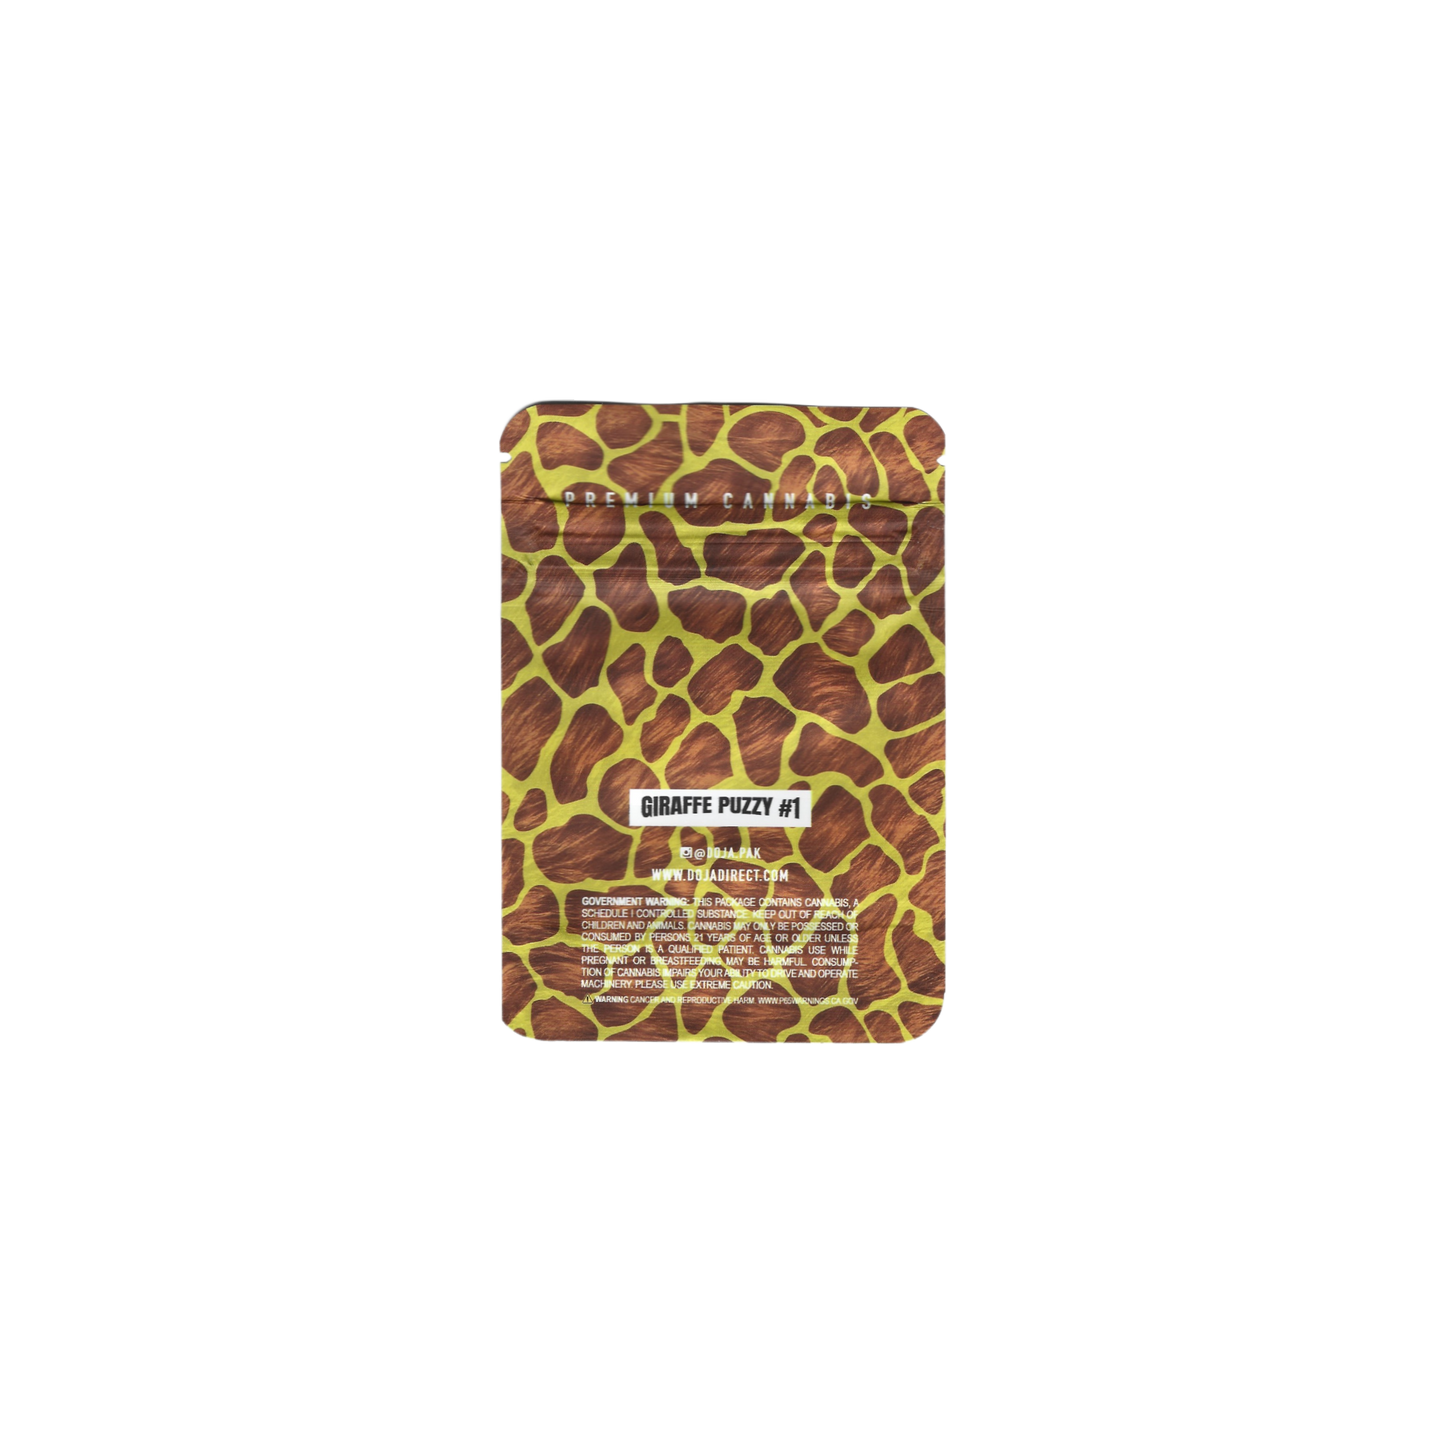 10x Doja Giraffe puzzy #1 Mylar Bag 3,5g - Leer